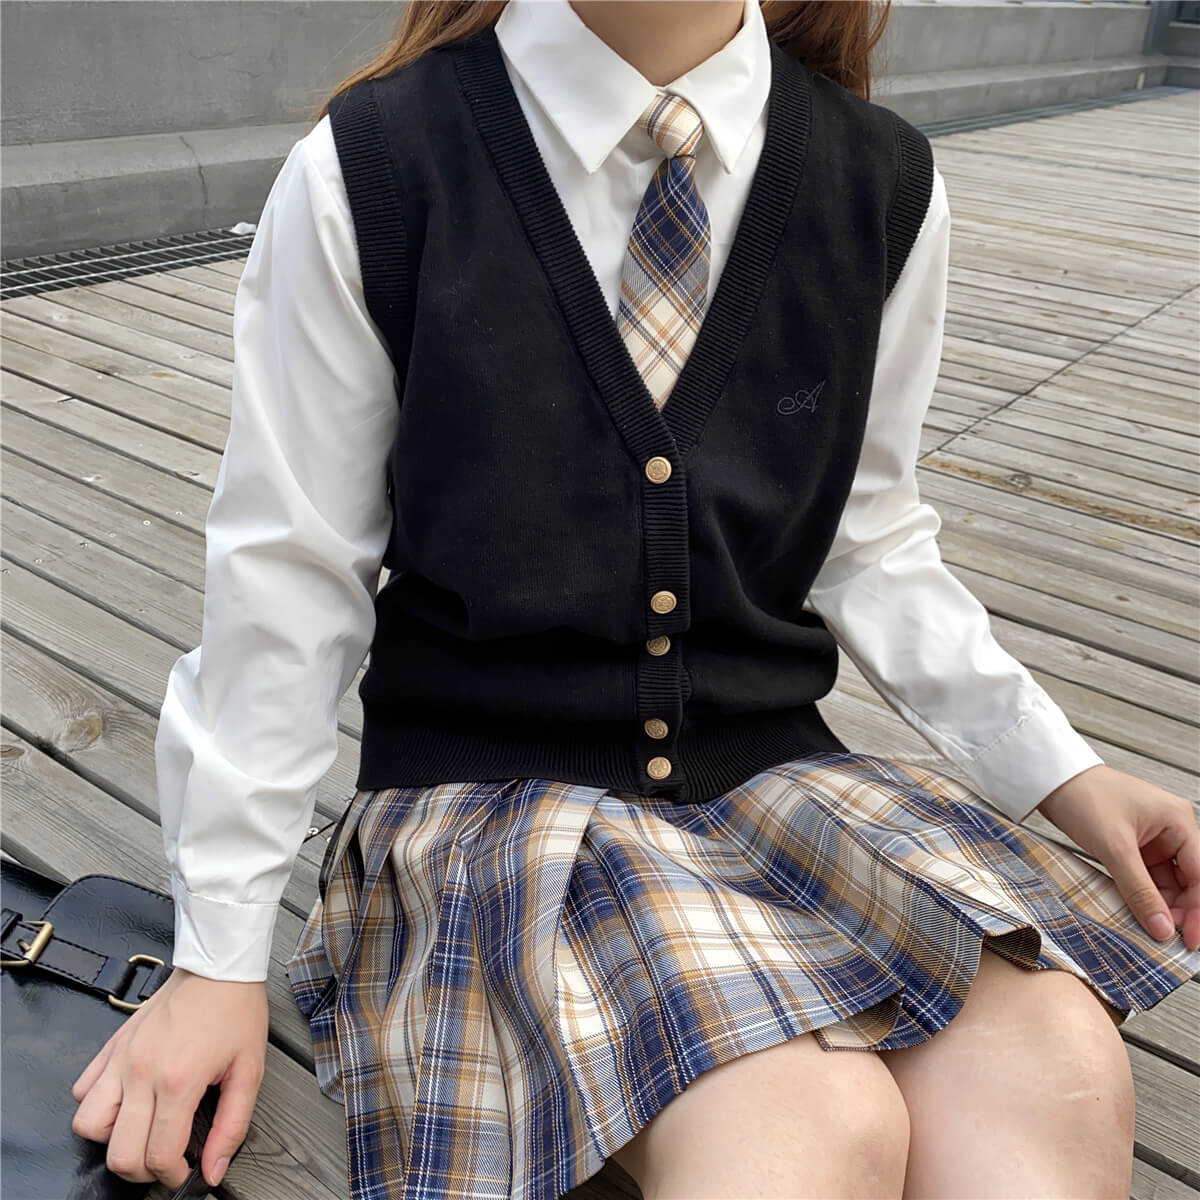    cutiekill-jk-buttons-uniform-knit-sweater-vest-c00745